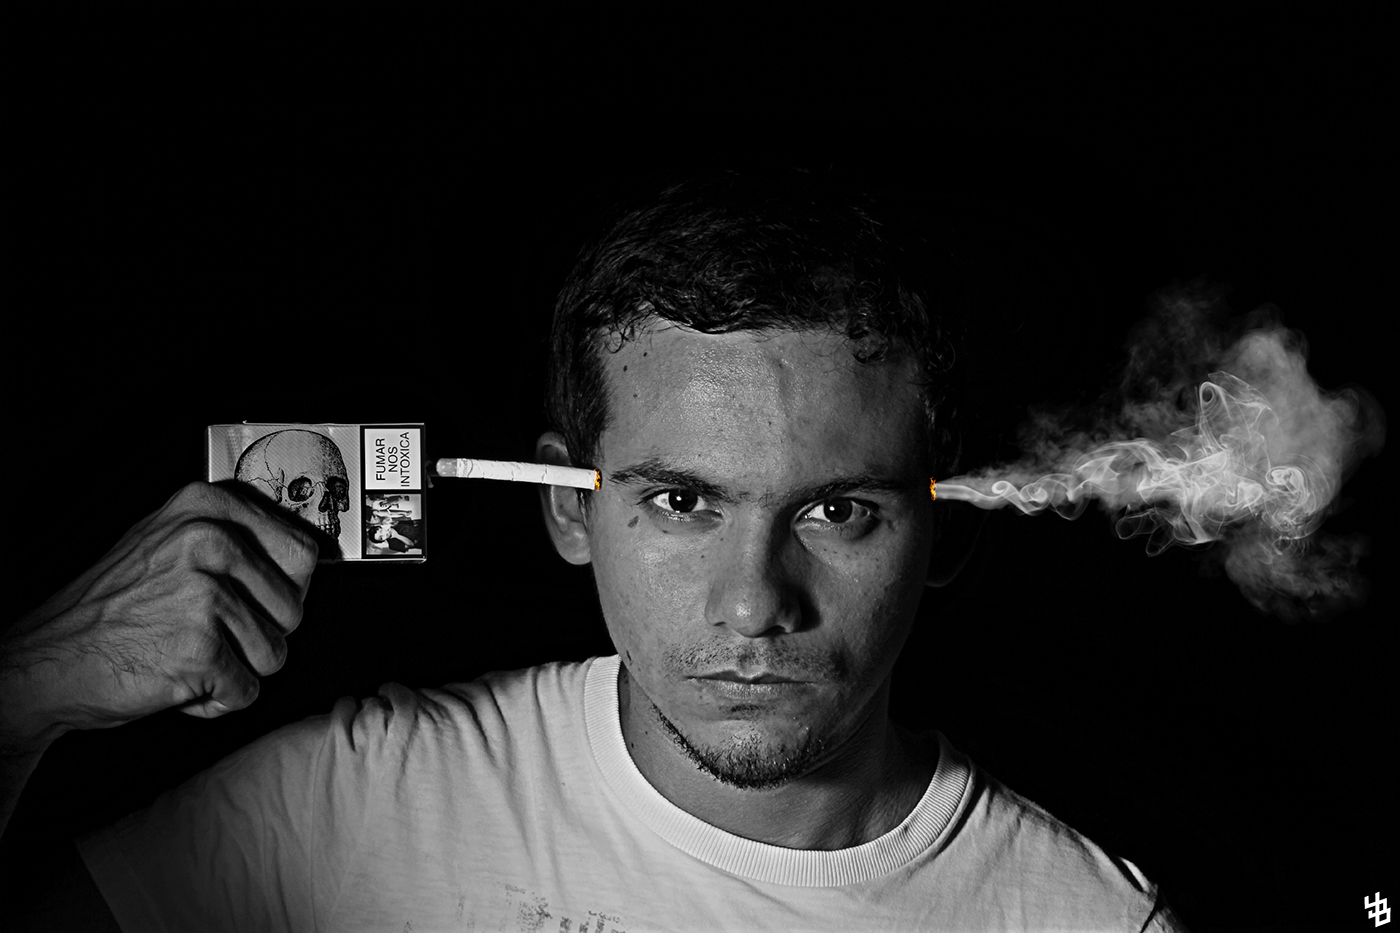 Cardiology Institute of bogota Lung Cancer cigarette not to smoke snuff YB yoba Fotografia QUIÉN CONSUME A quien Bucaramanga santander colombia